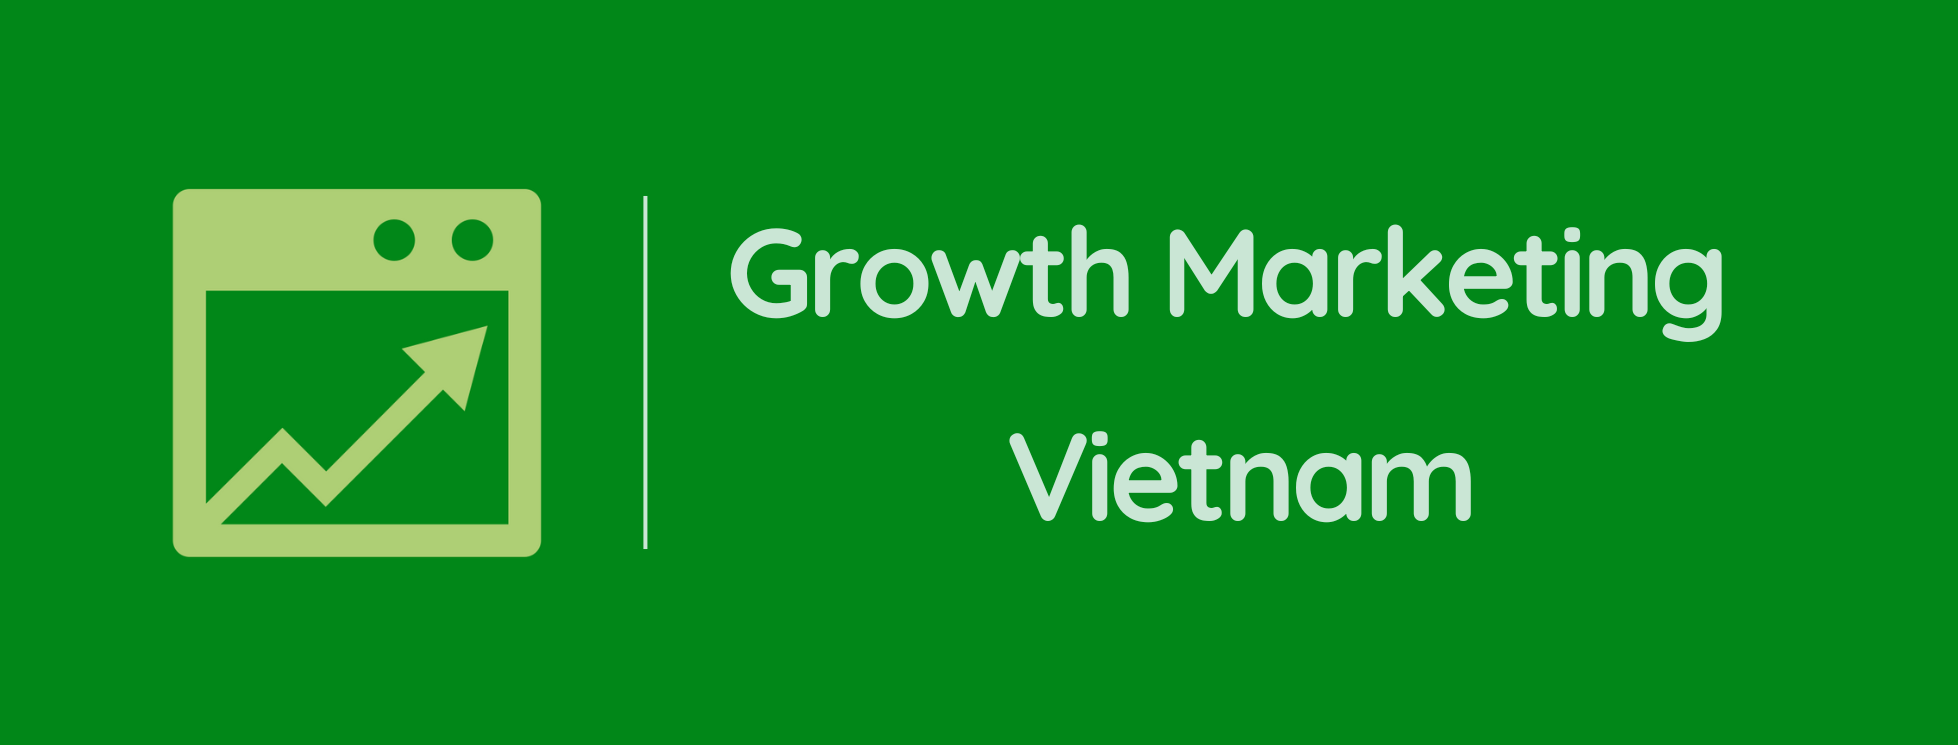 Growth Marketing Vietnam